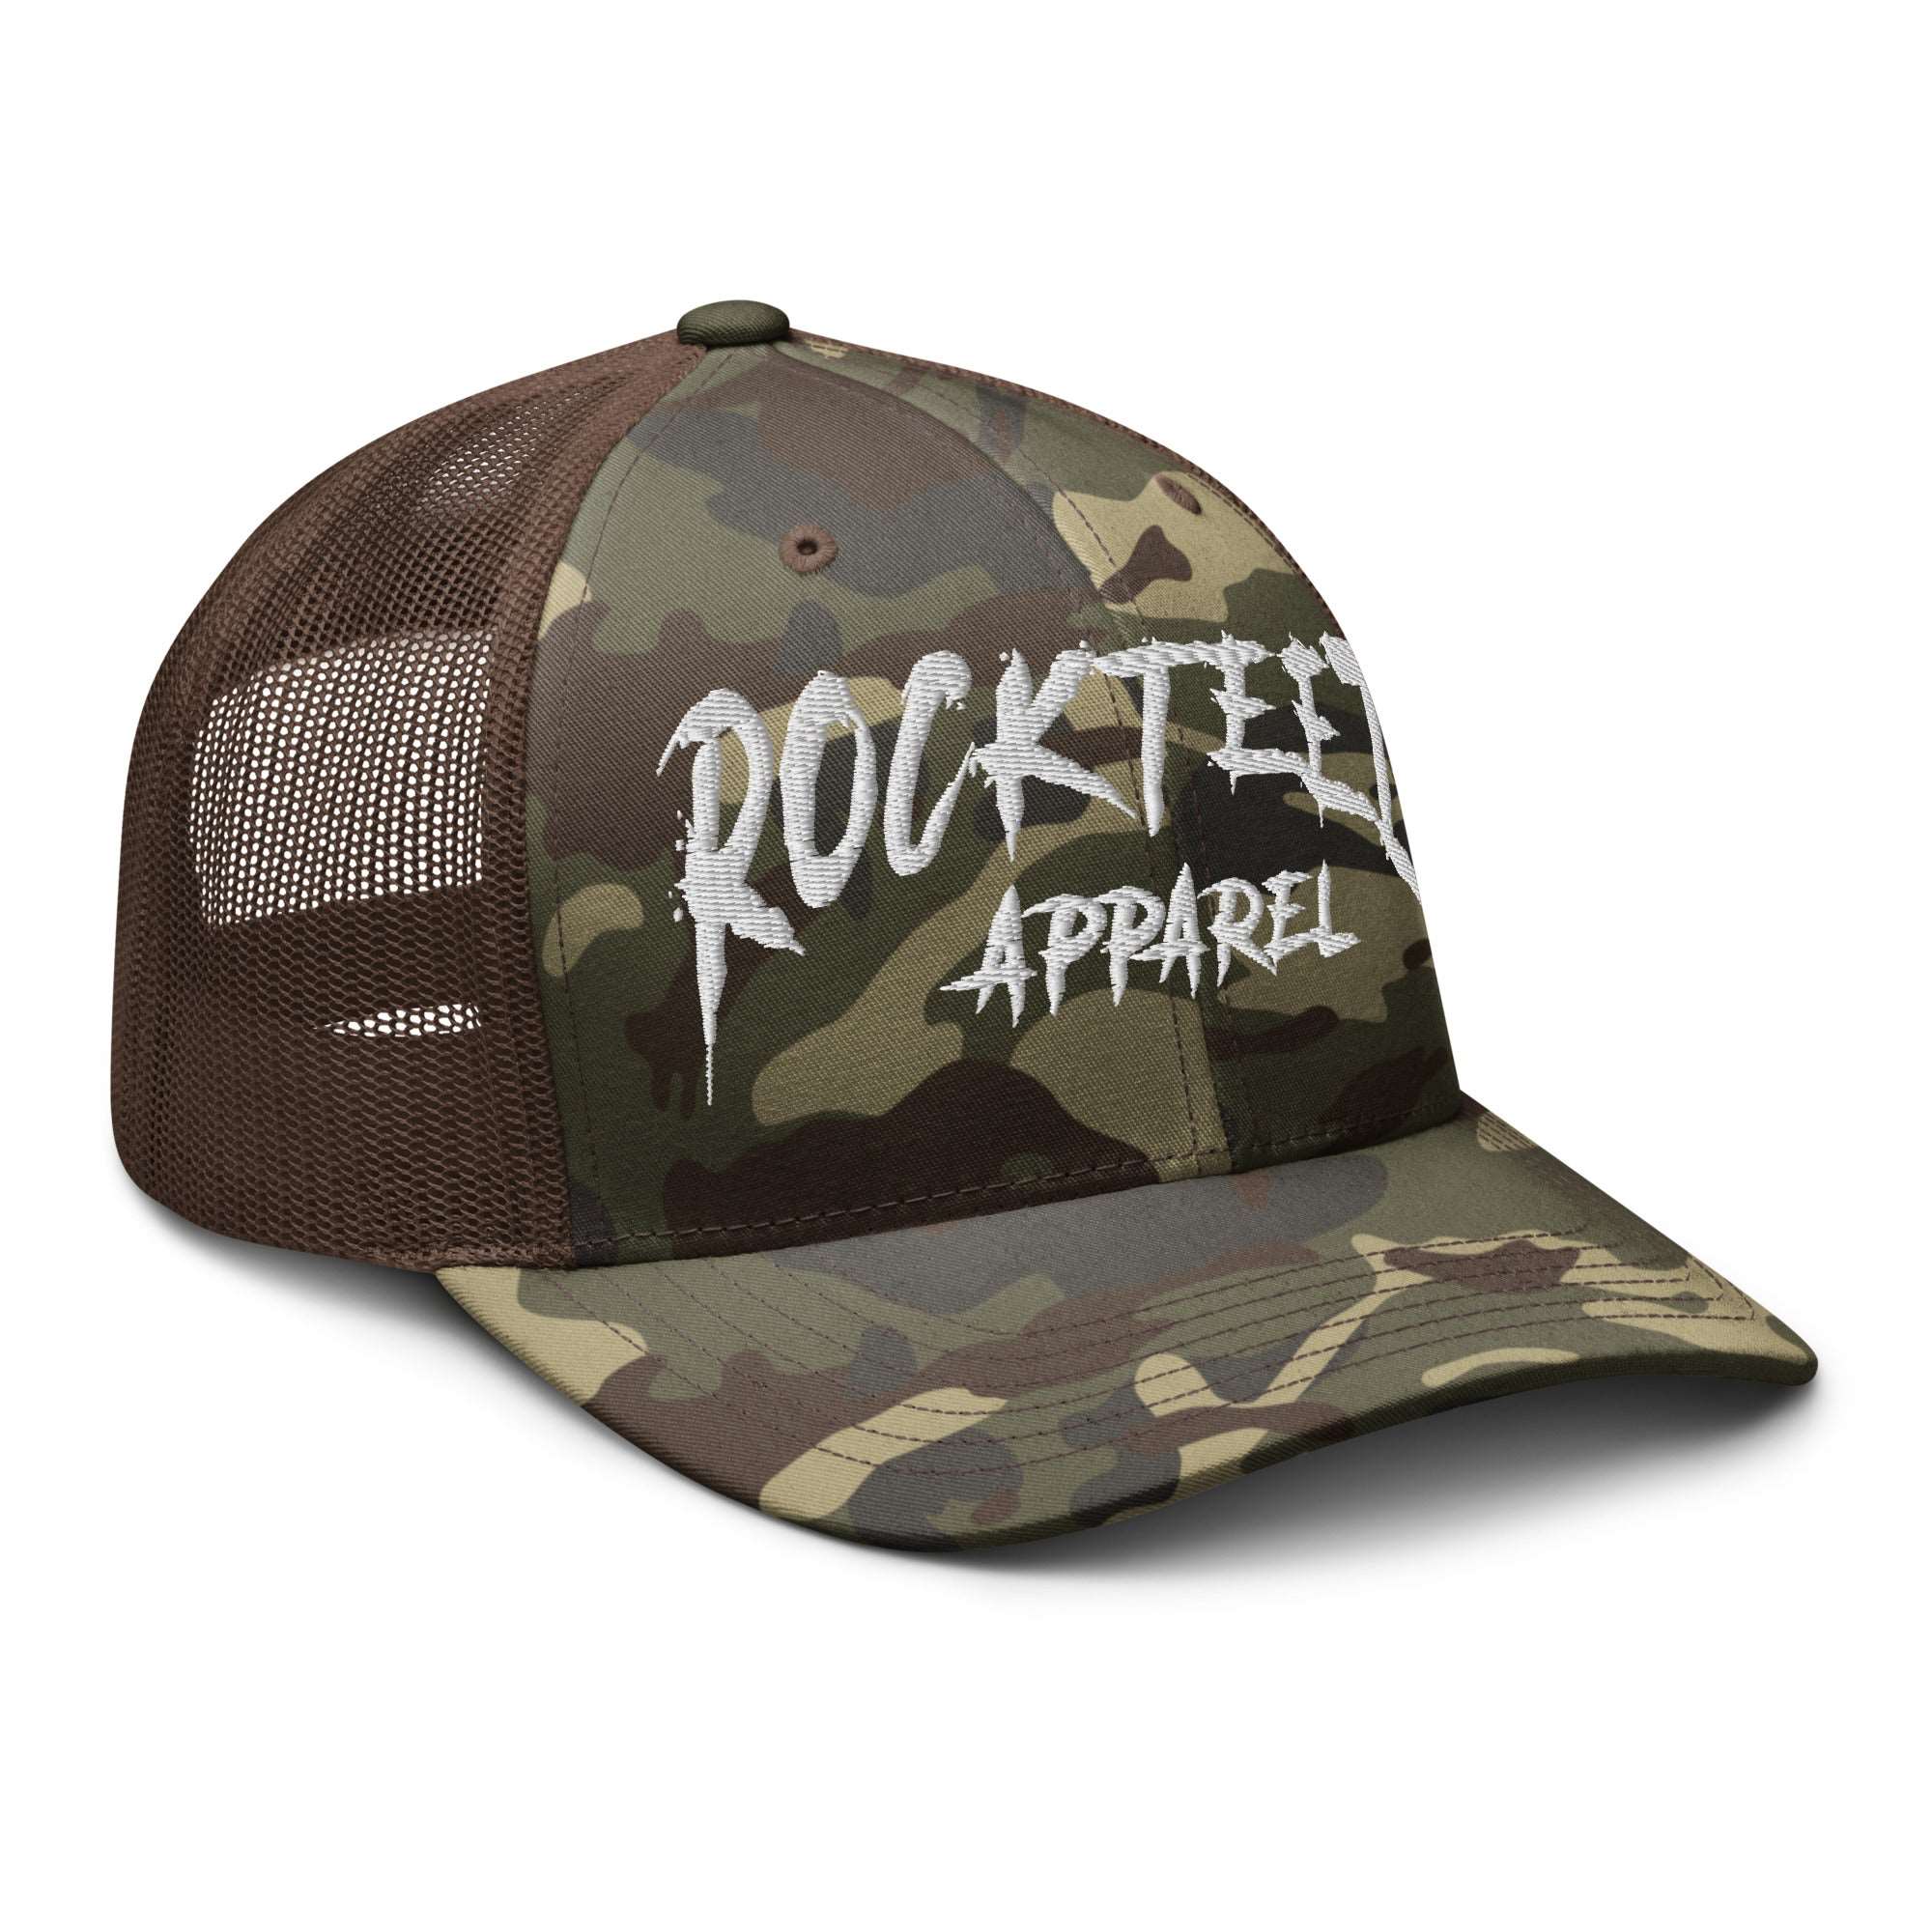 Rockteez Apparel Camouflage Trucker Hat White